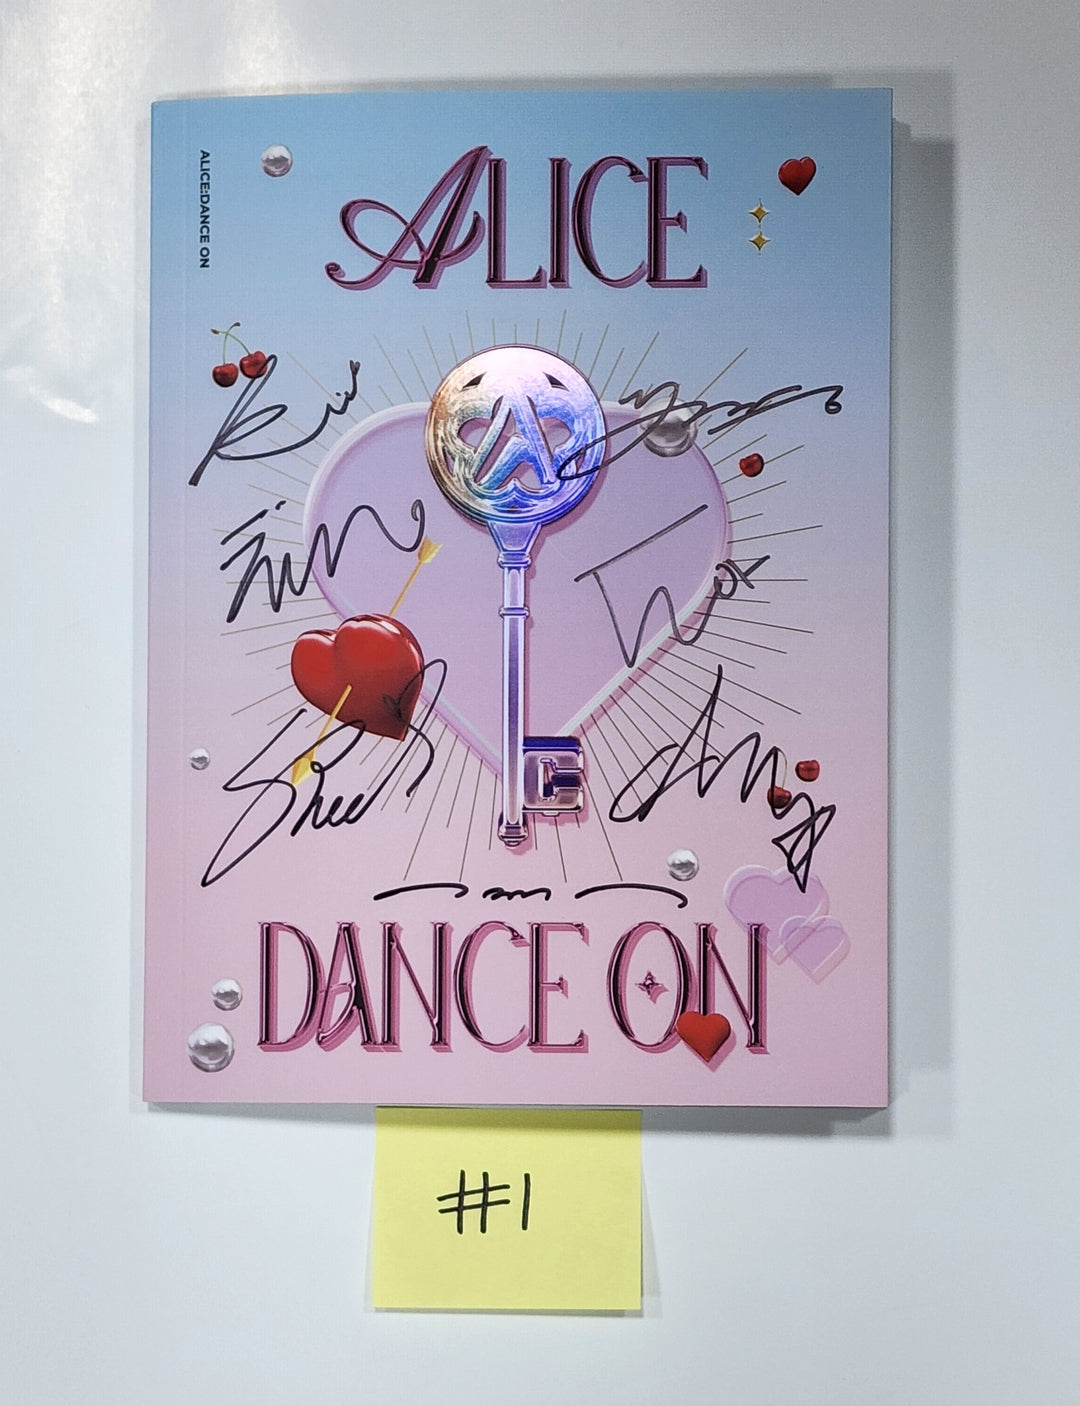 ALICE "DANCE ON" - 친필 사인(사인) 프로모 앨범